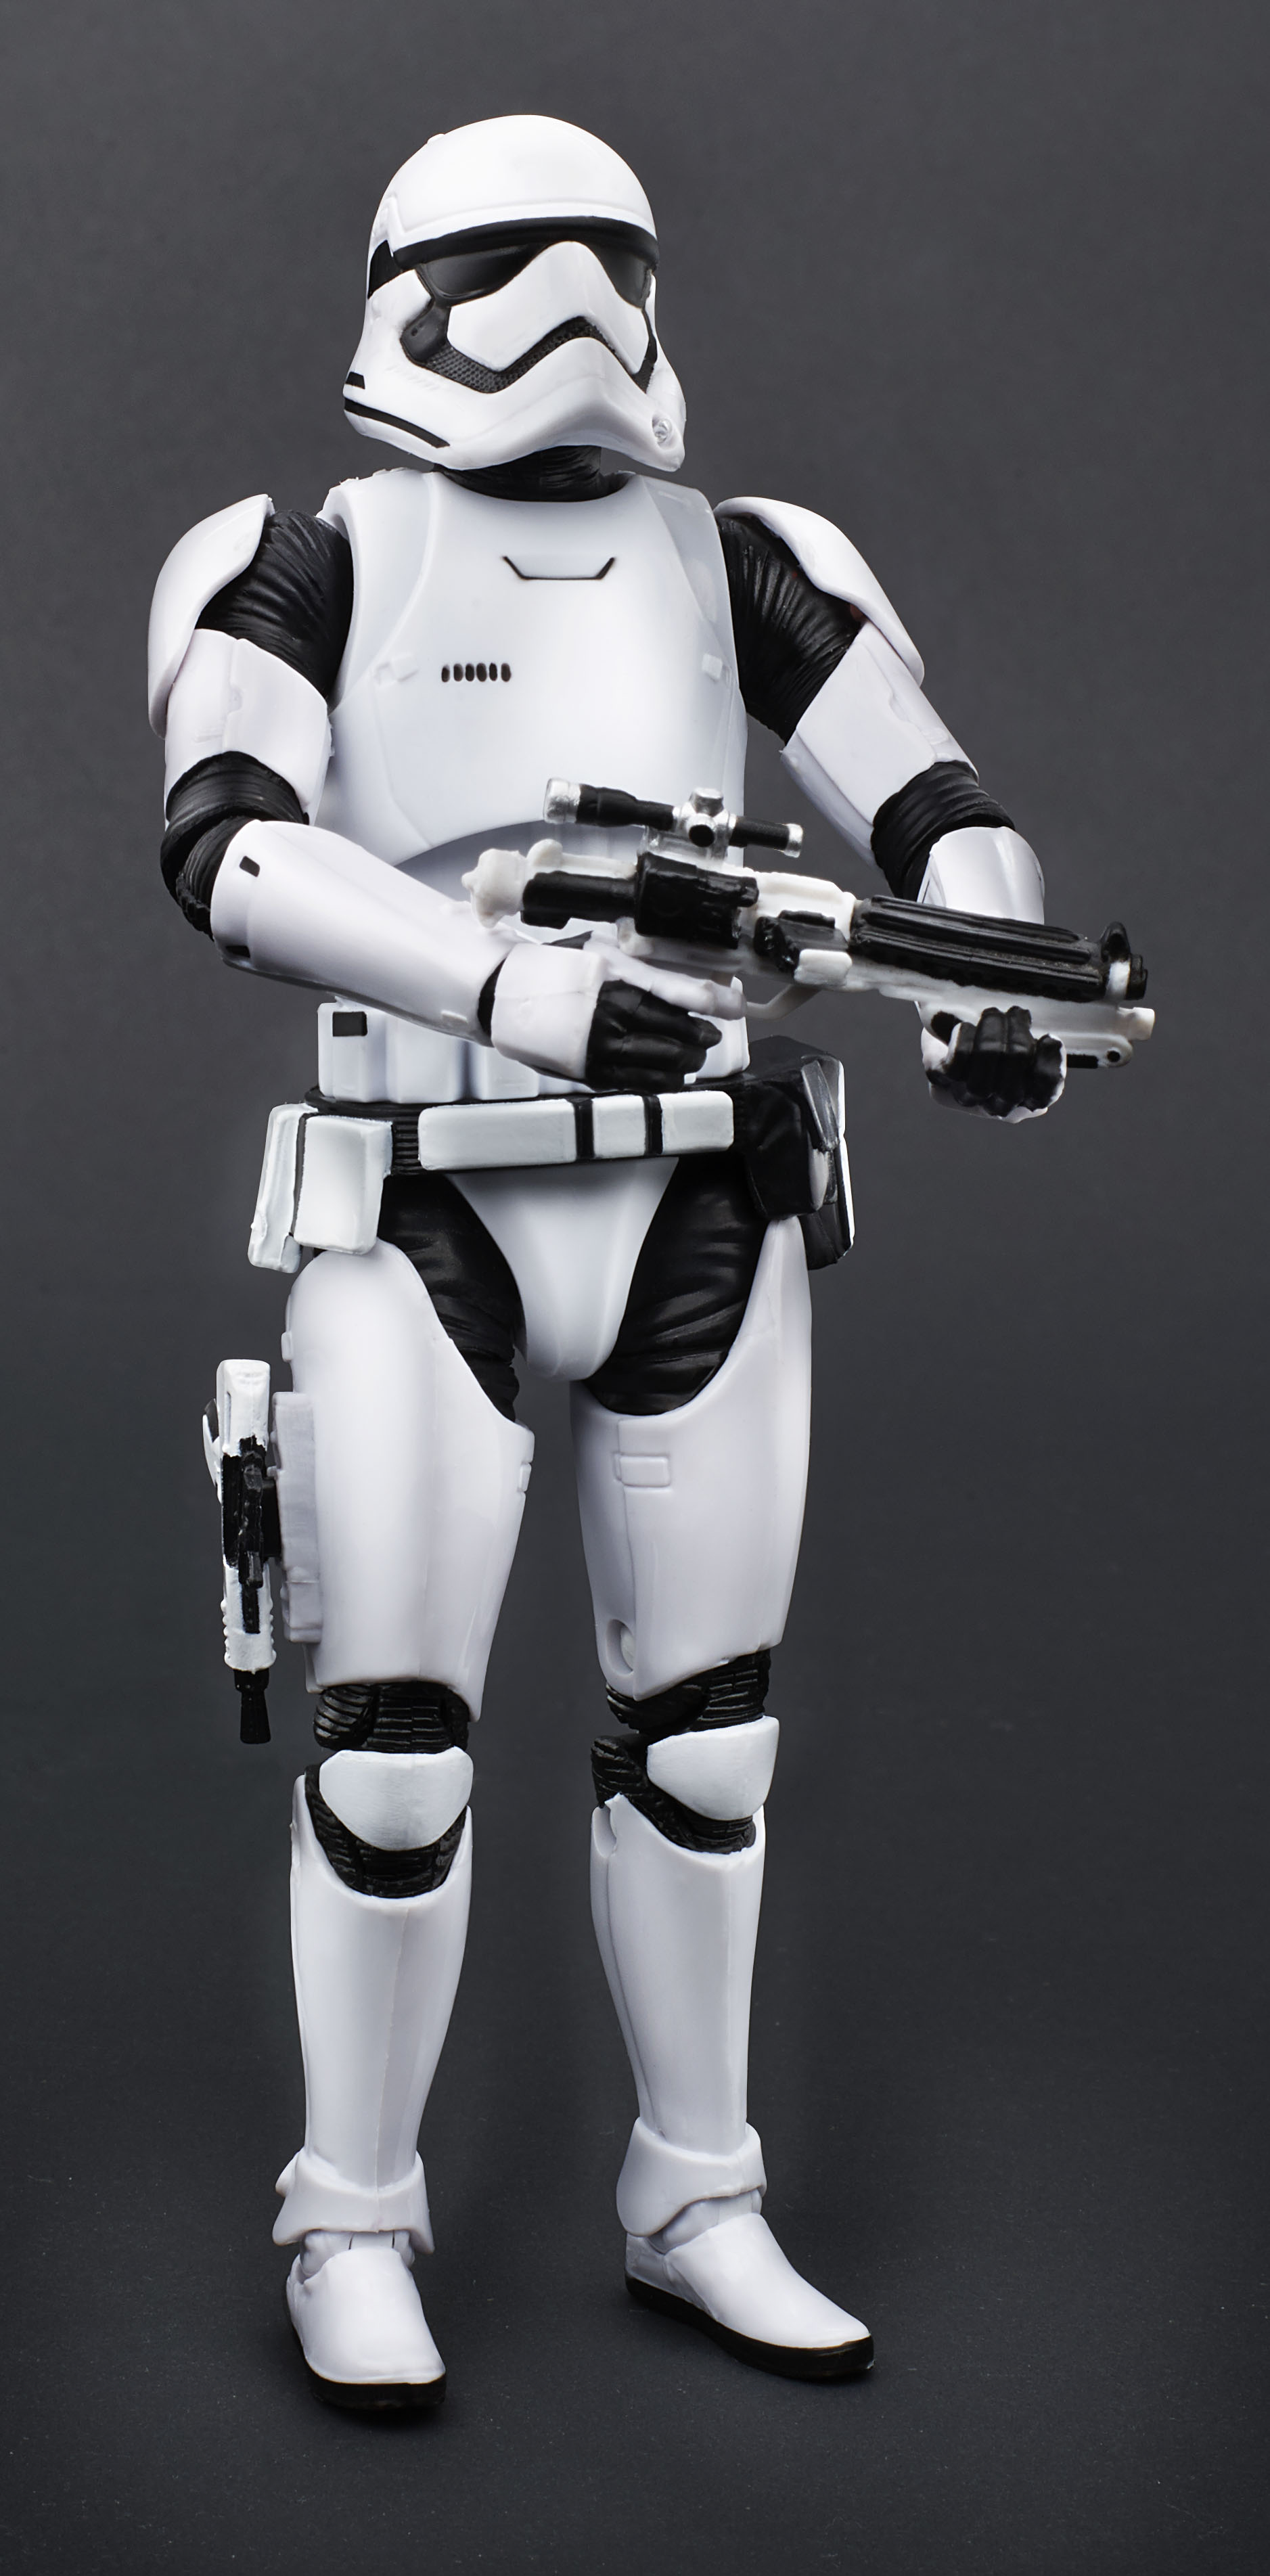 Star Wars Stormtrooper The Force Awakens - HD Wallpaper 